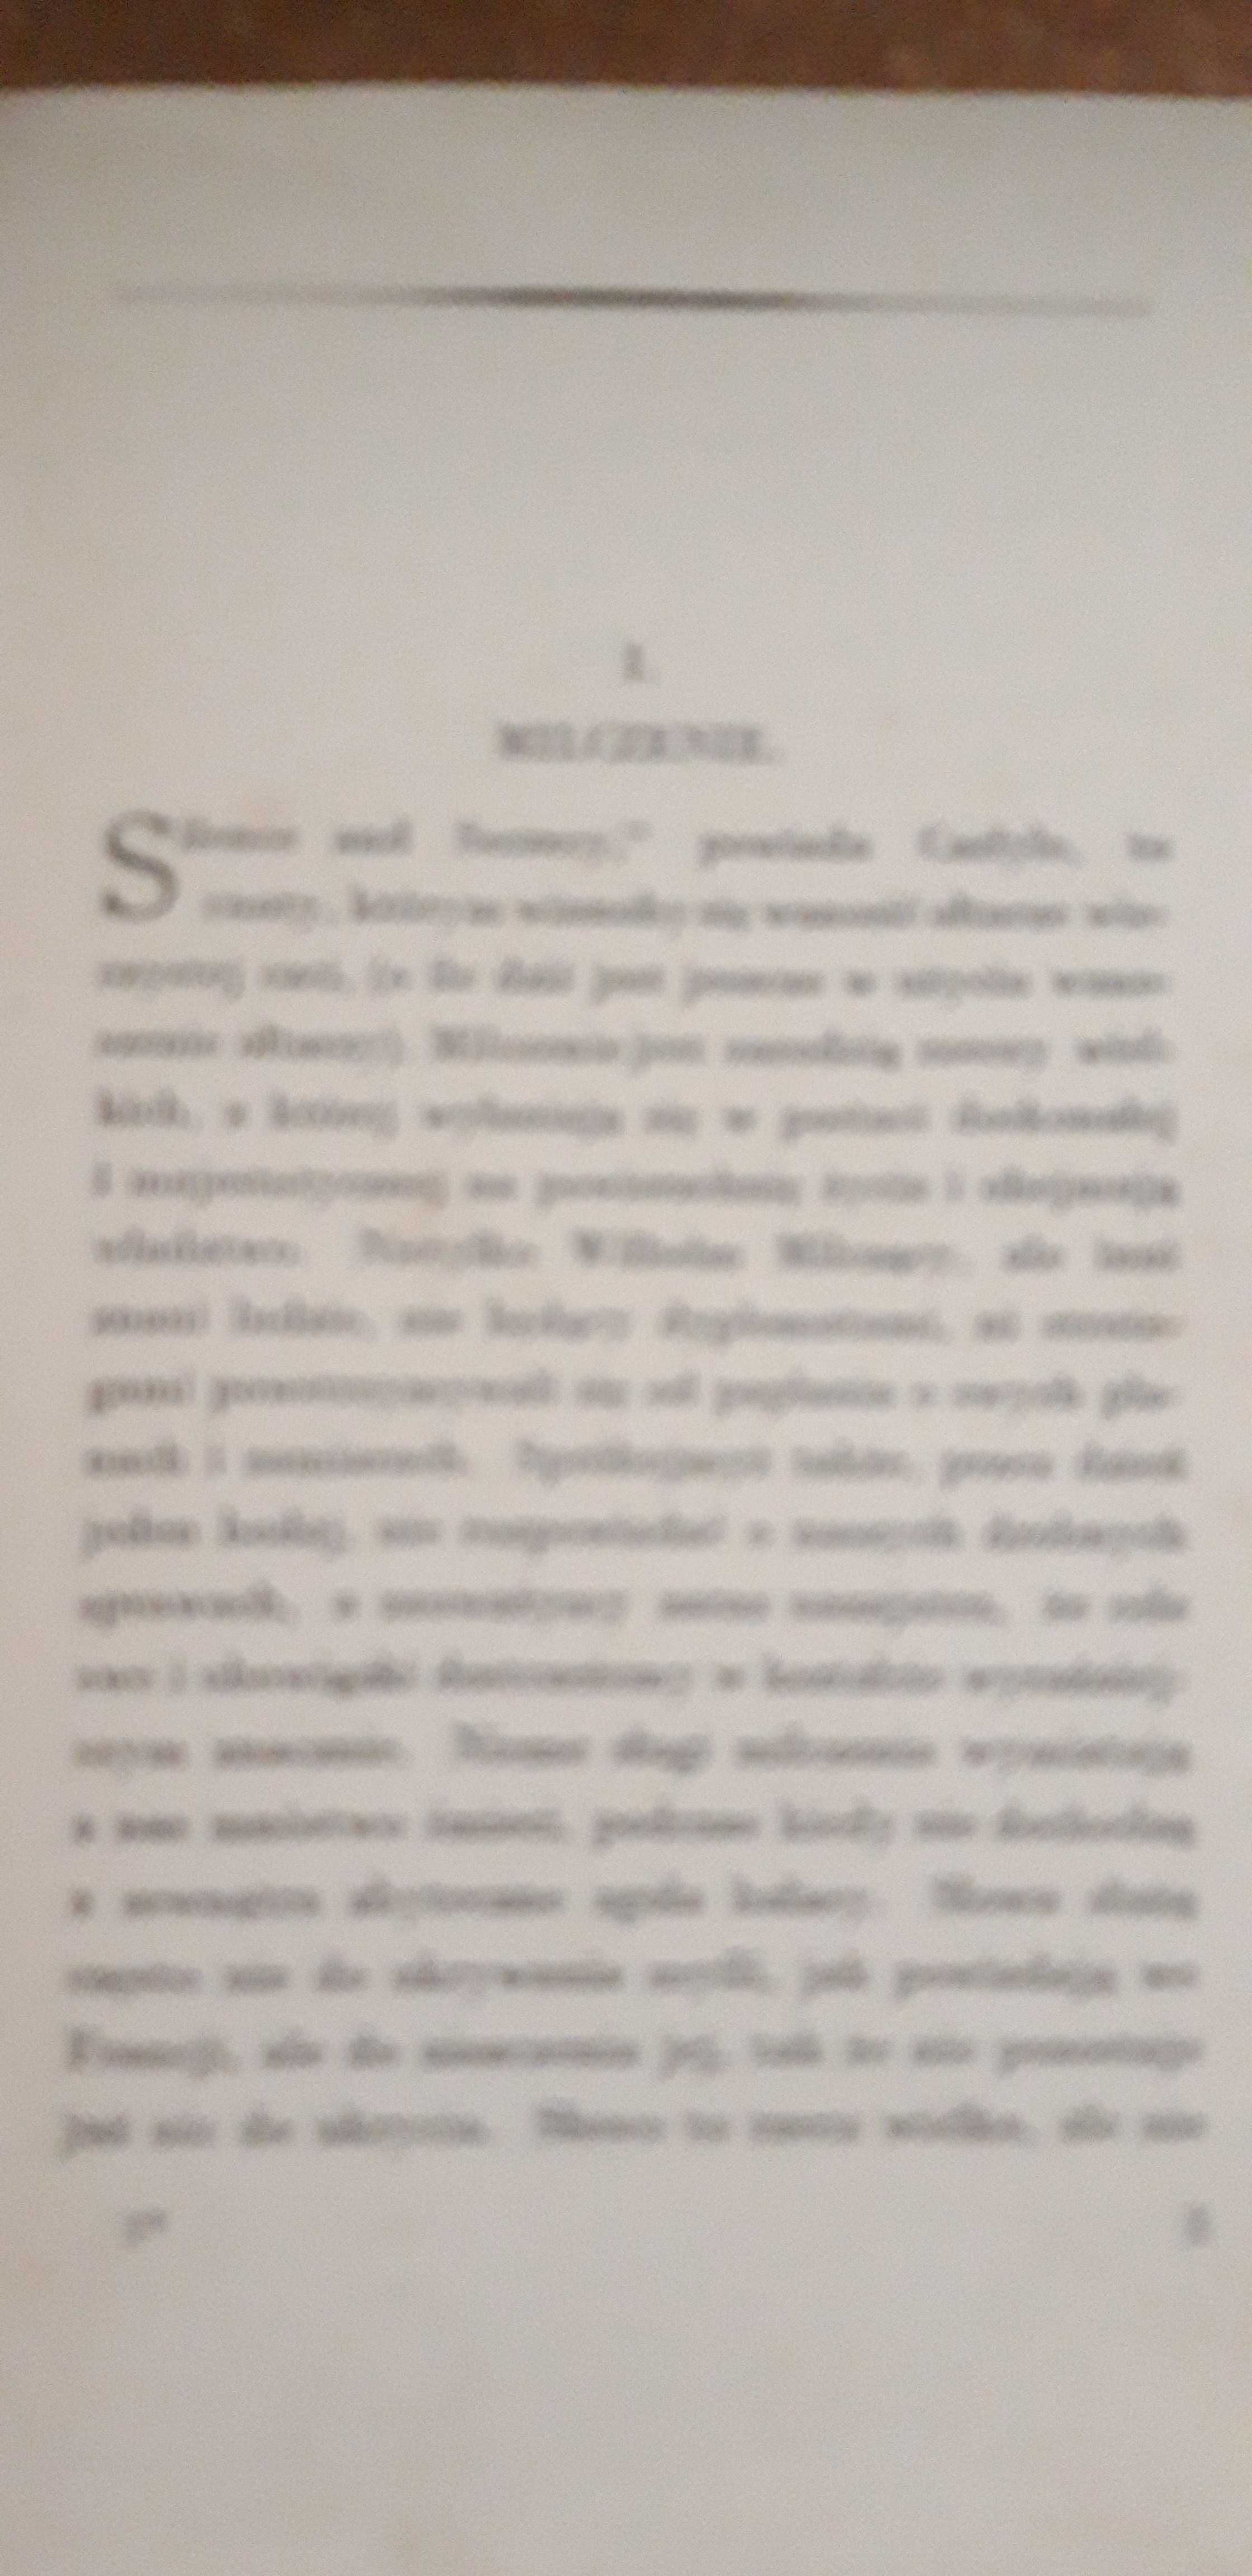 SKARB  UBOGICH -M. MAETERLINCK- Lwów-P-ń1926 opr. Bibl. L.  Nobla